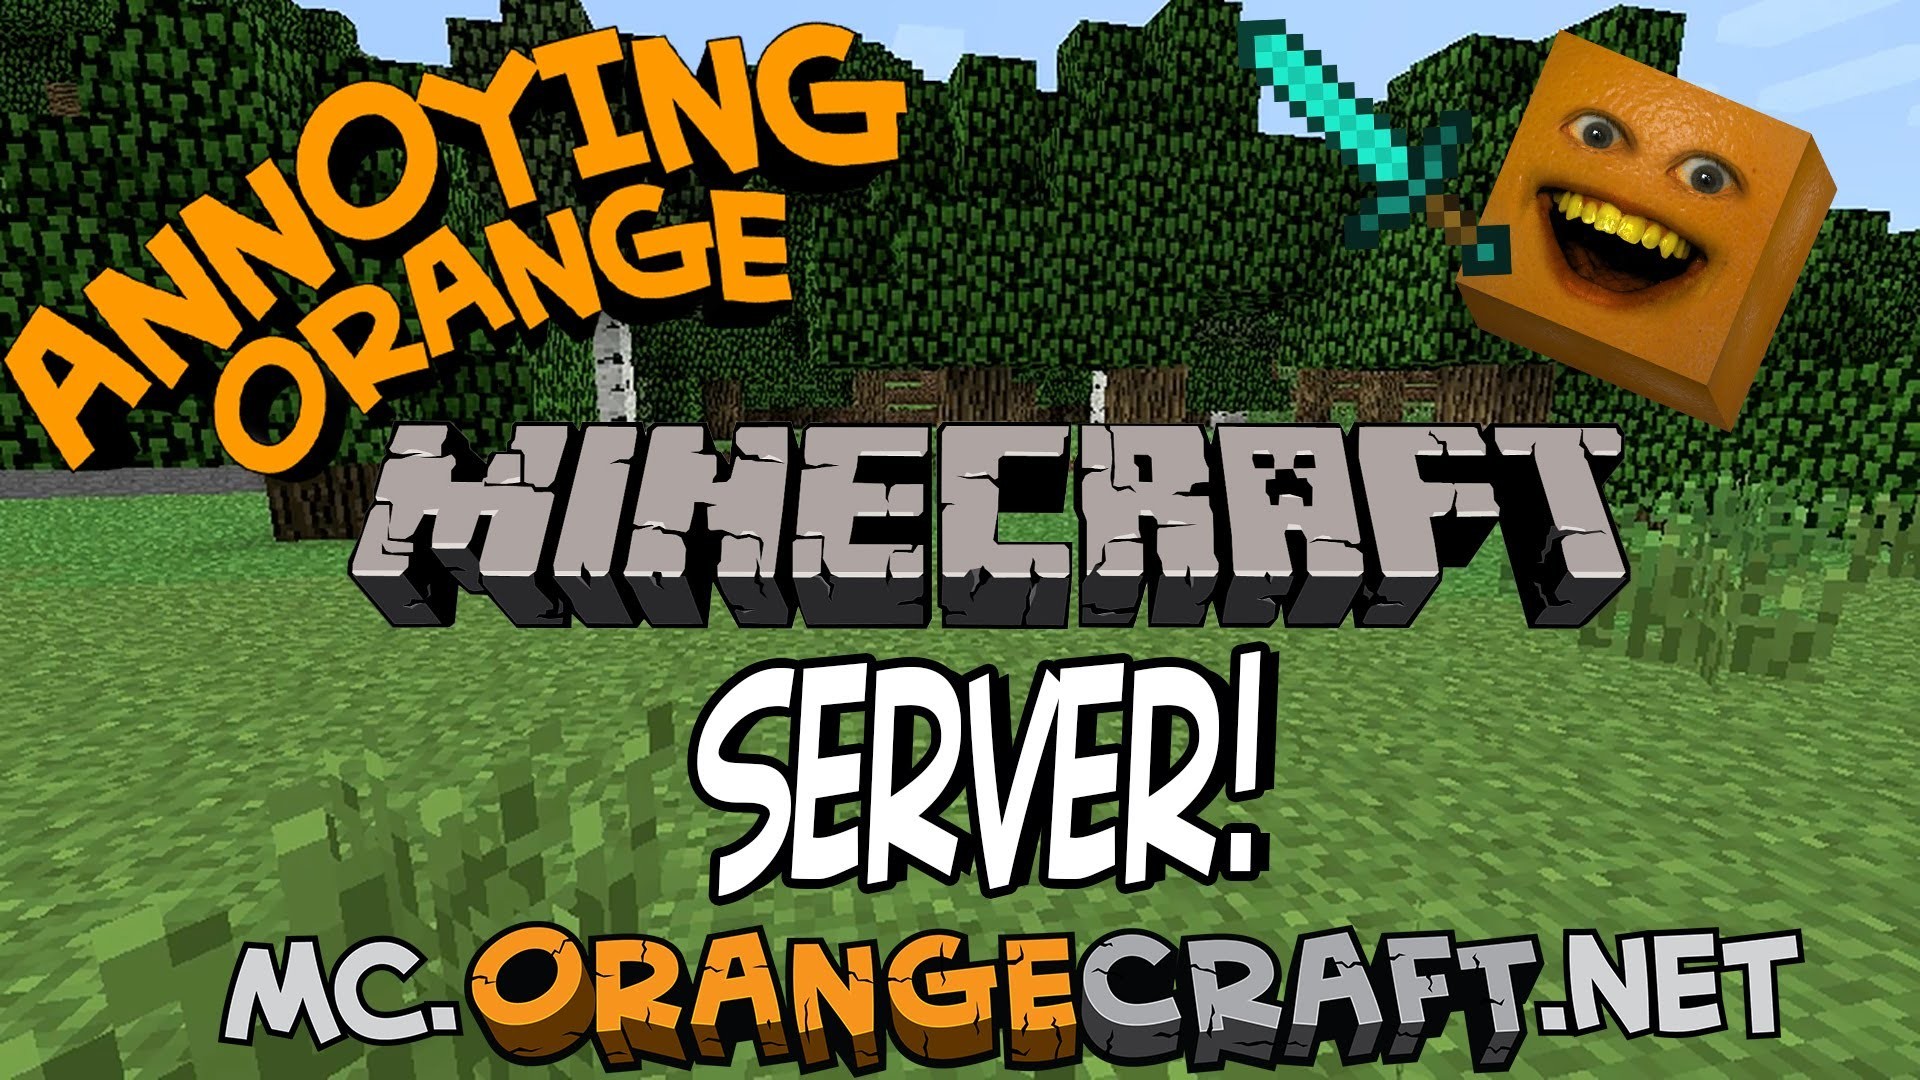 1920x1080 The Annoying Orange Minecraft Server - YouTube